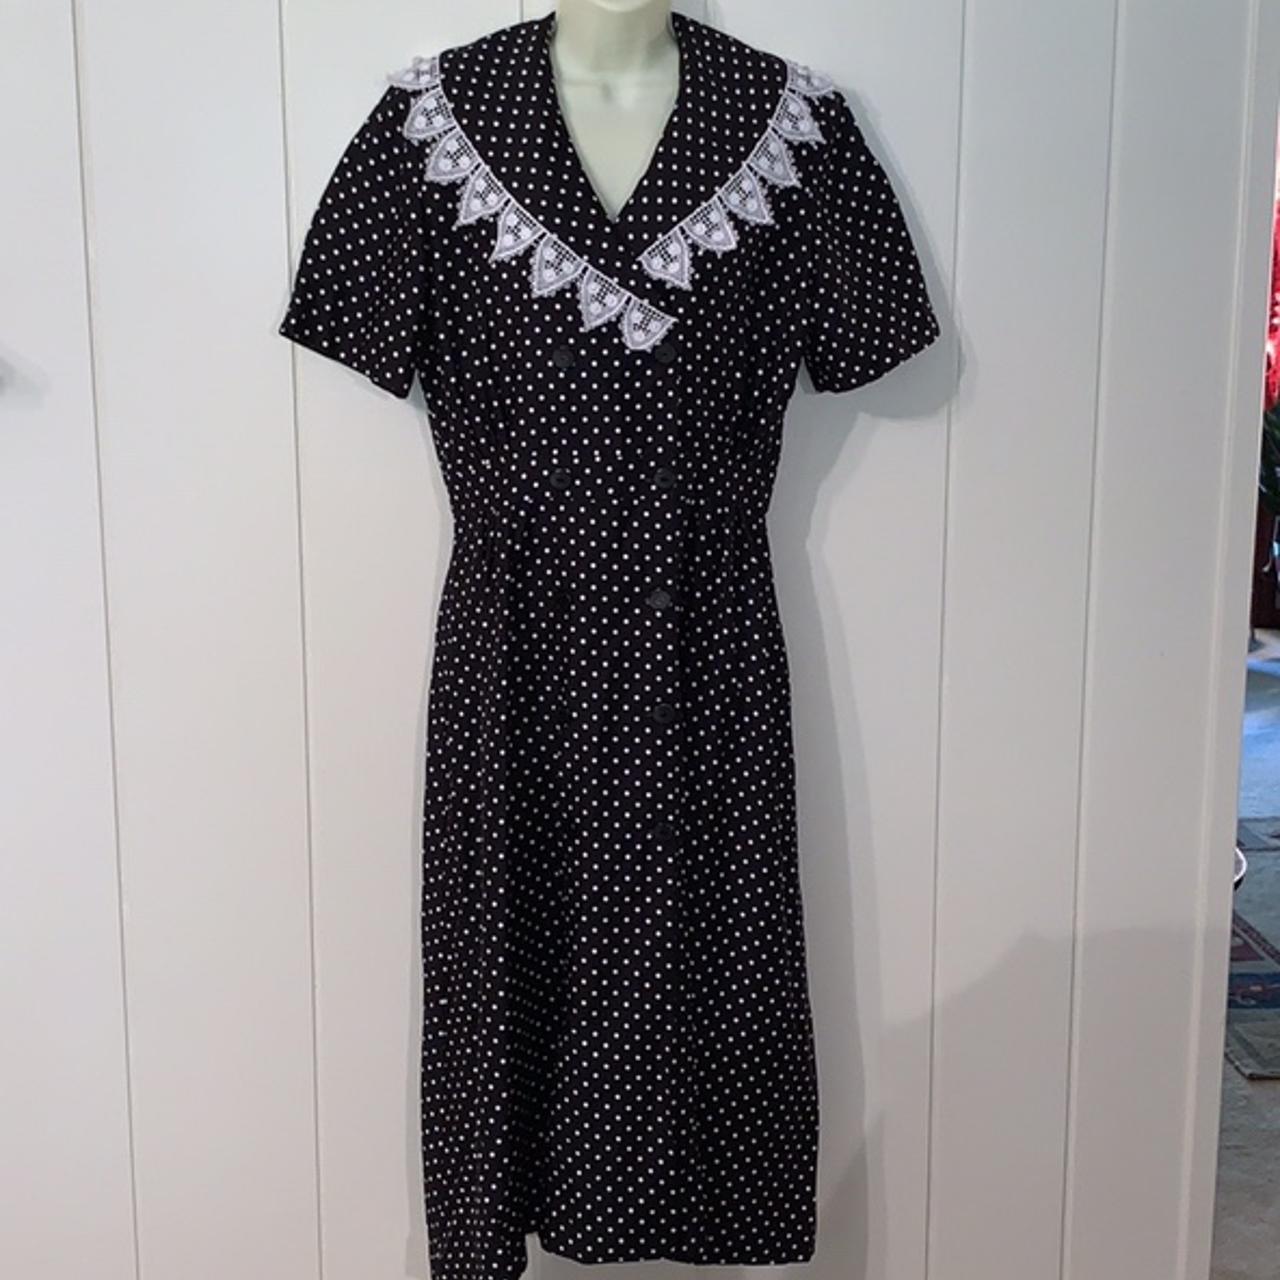 Vintage 80s does 40s black polka dot dress with lace... - Depop